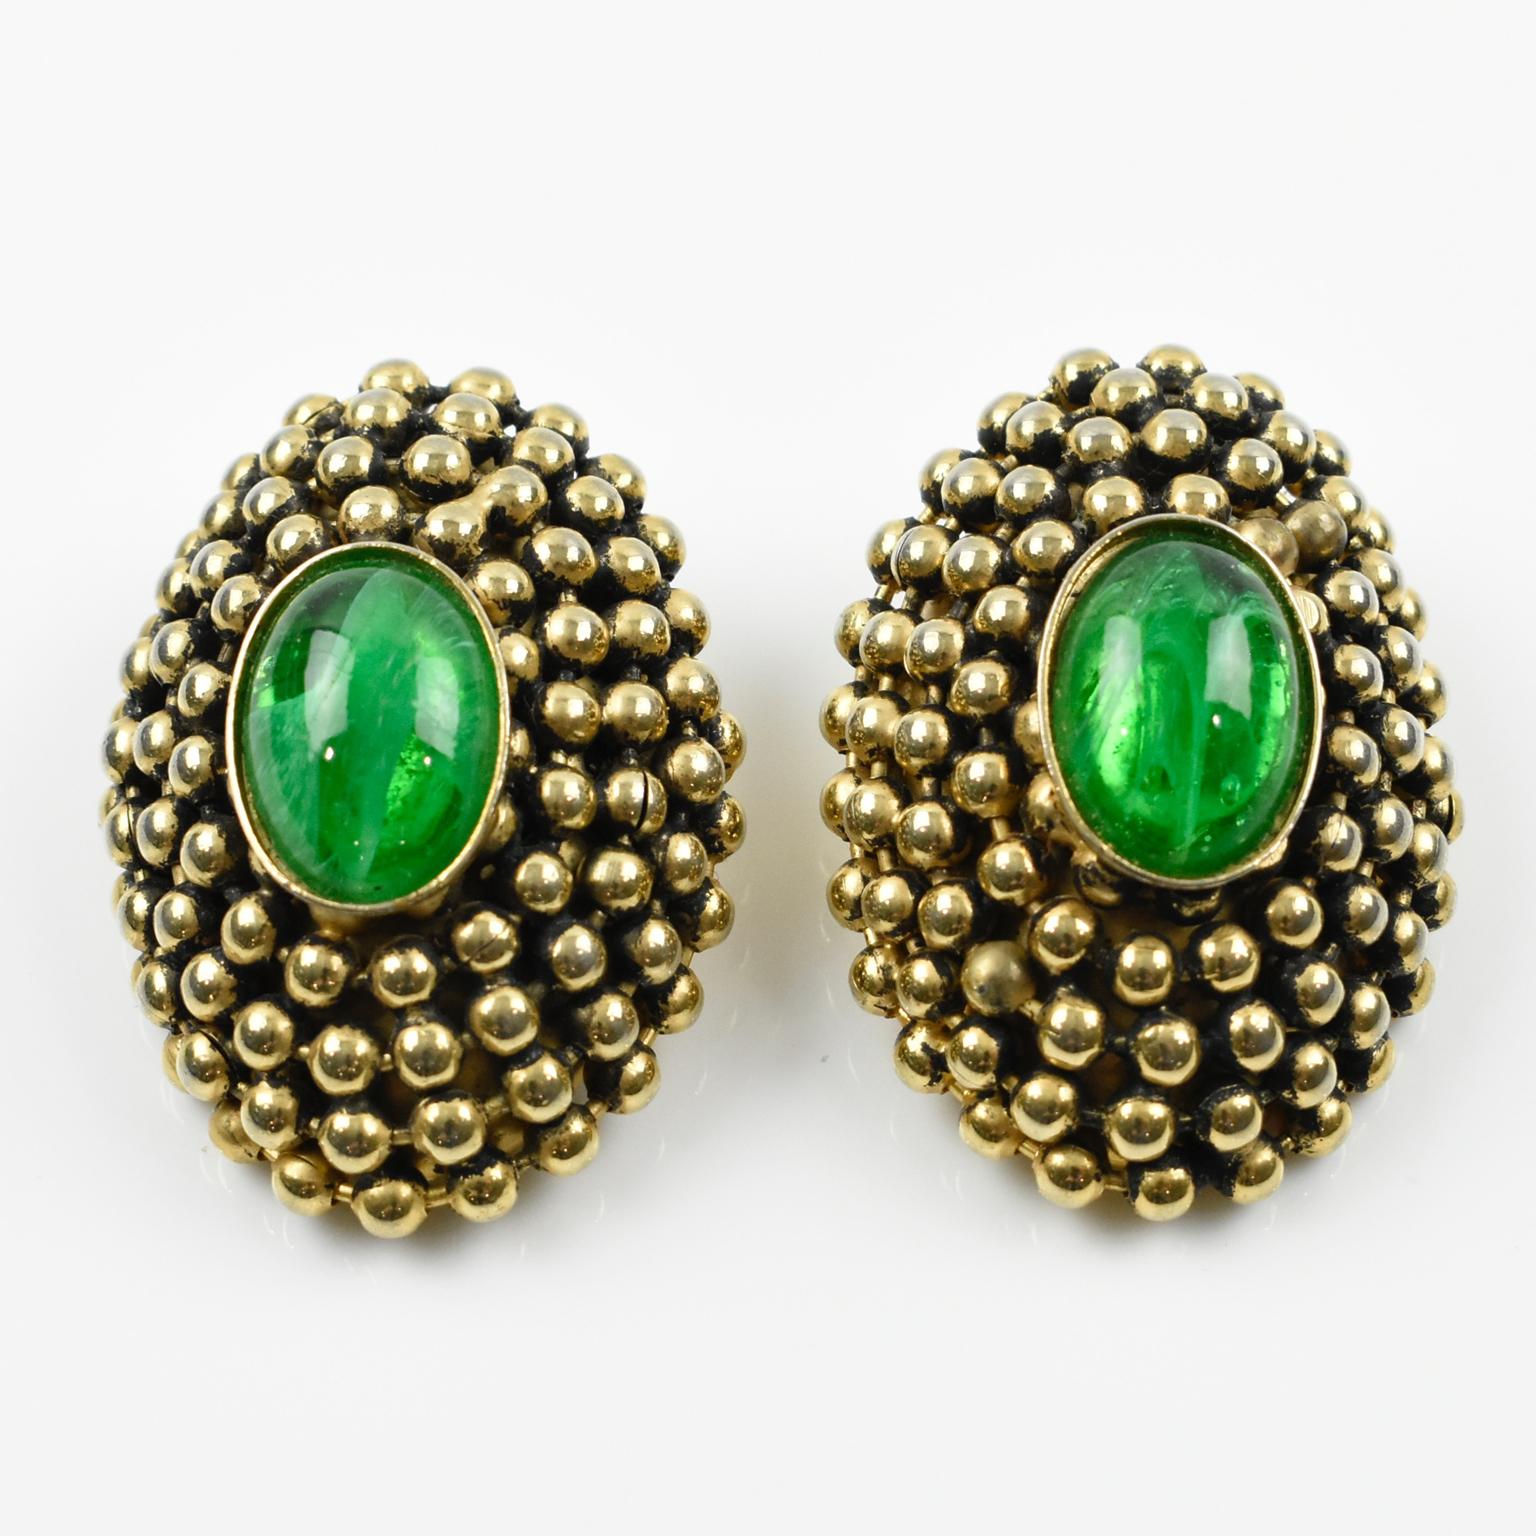 Byzantine Artisan Designer Clip Earrings Gripoix Green Poured Glass Cabochon